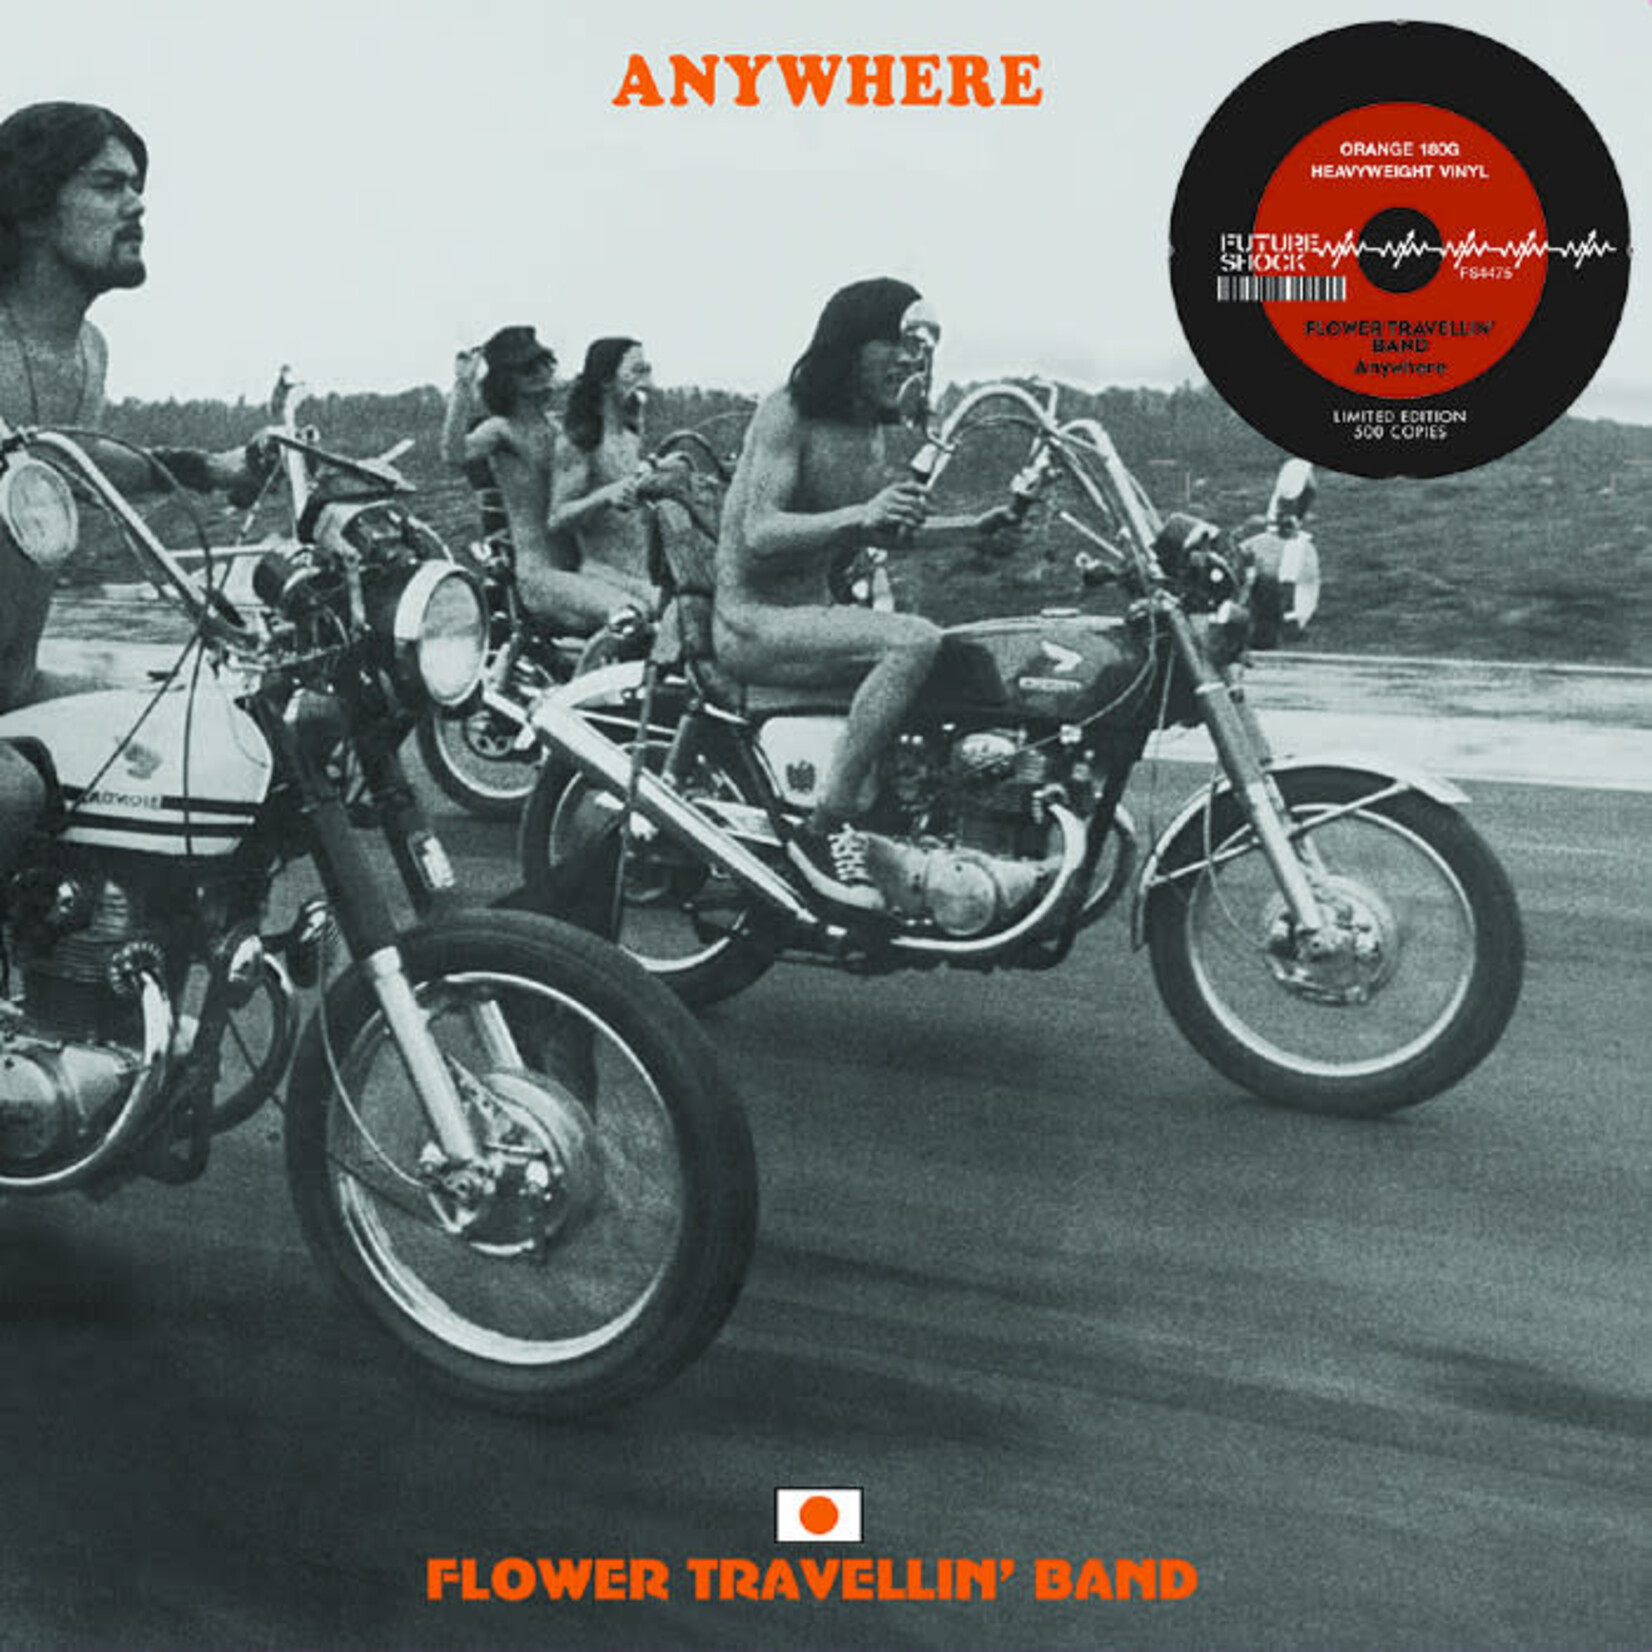 [New] Flower Travellin' Band - Anywhere (orange vinyl)